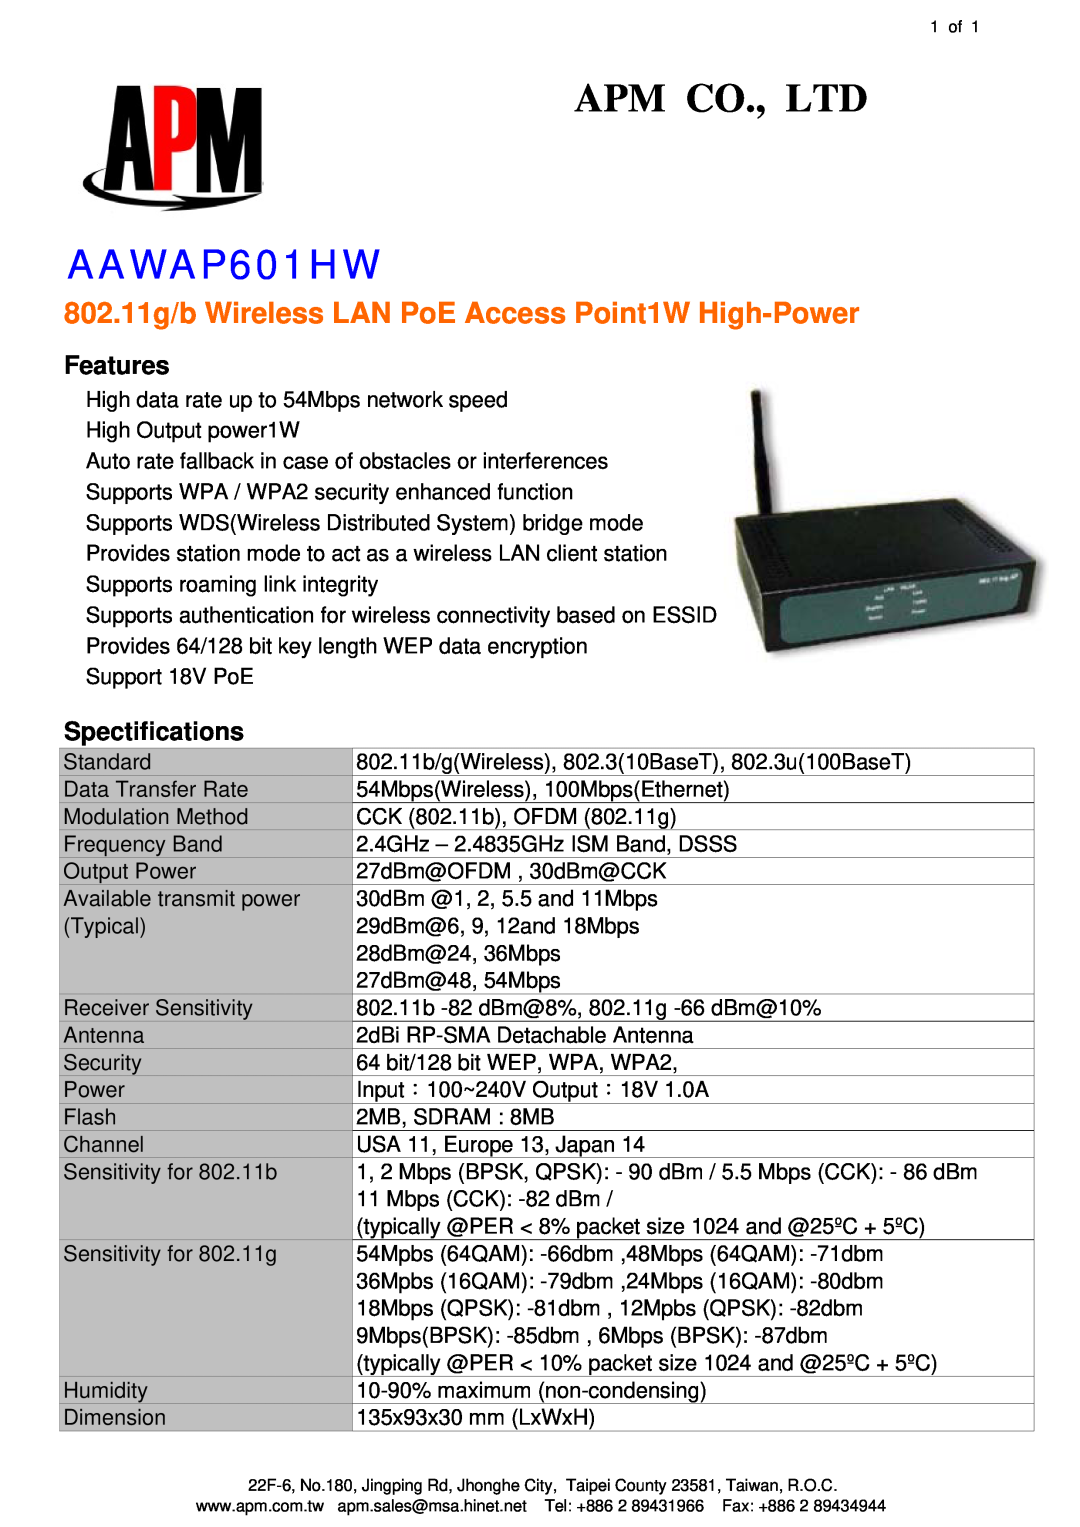 APM AAWAP601HW manual 802.11g/b Wireless LAN PoE Access Point1W High-Power, Features, Spectifications 